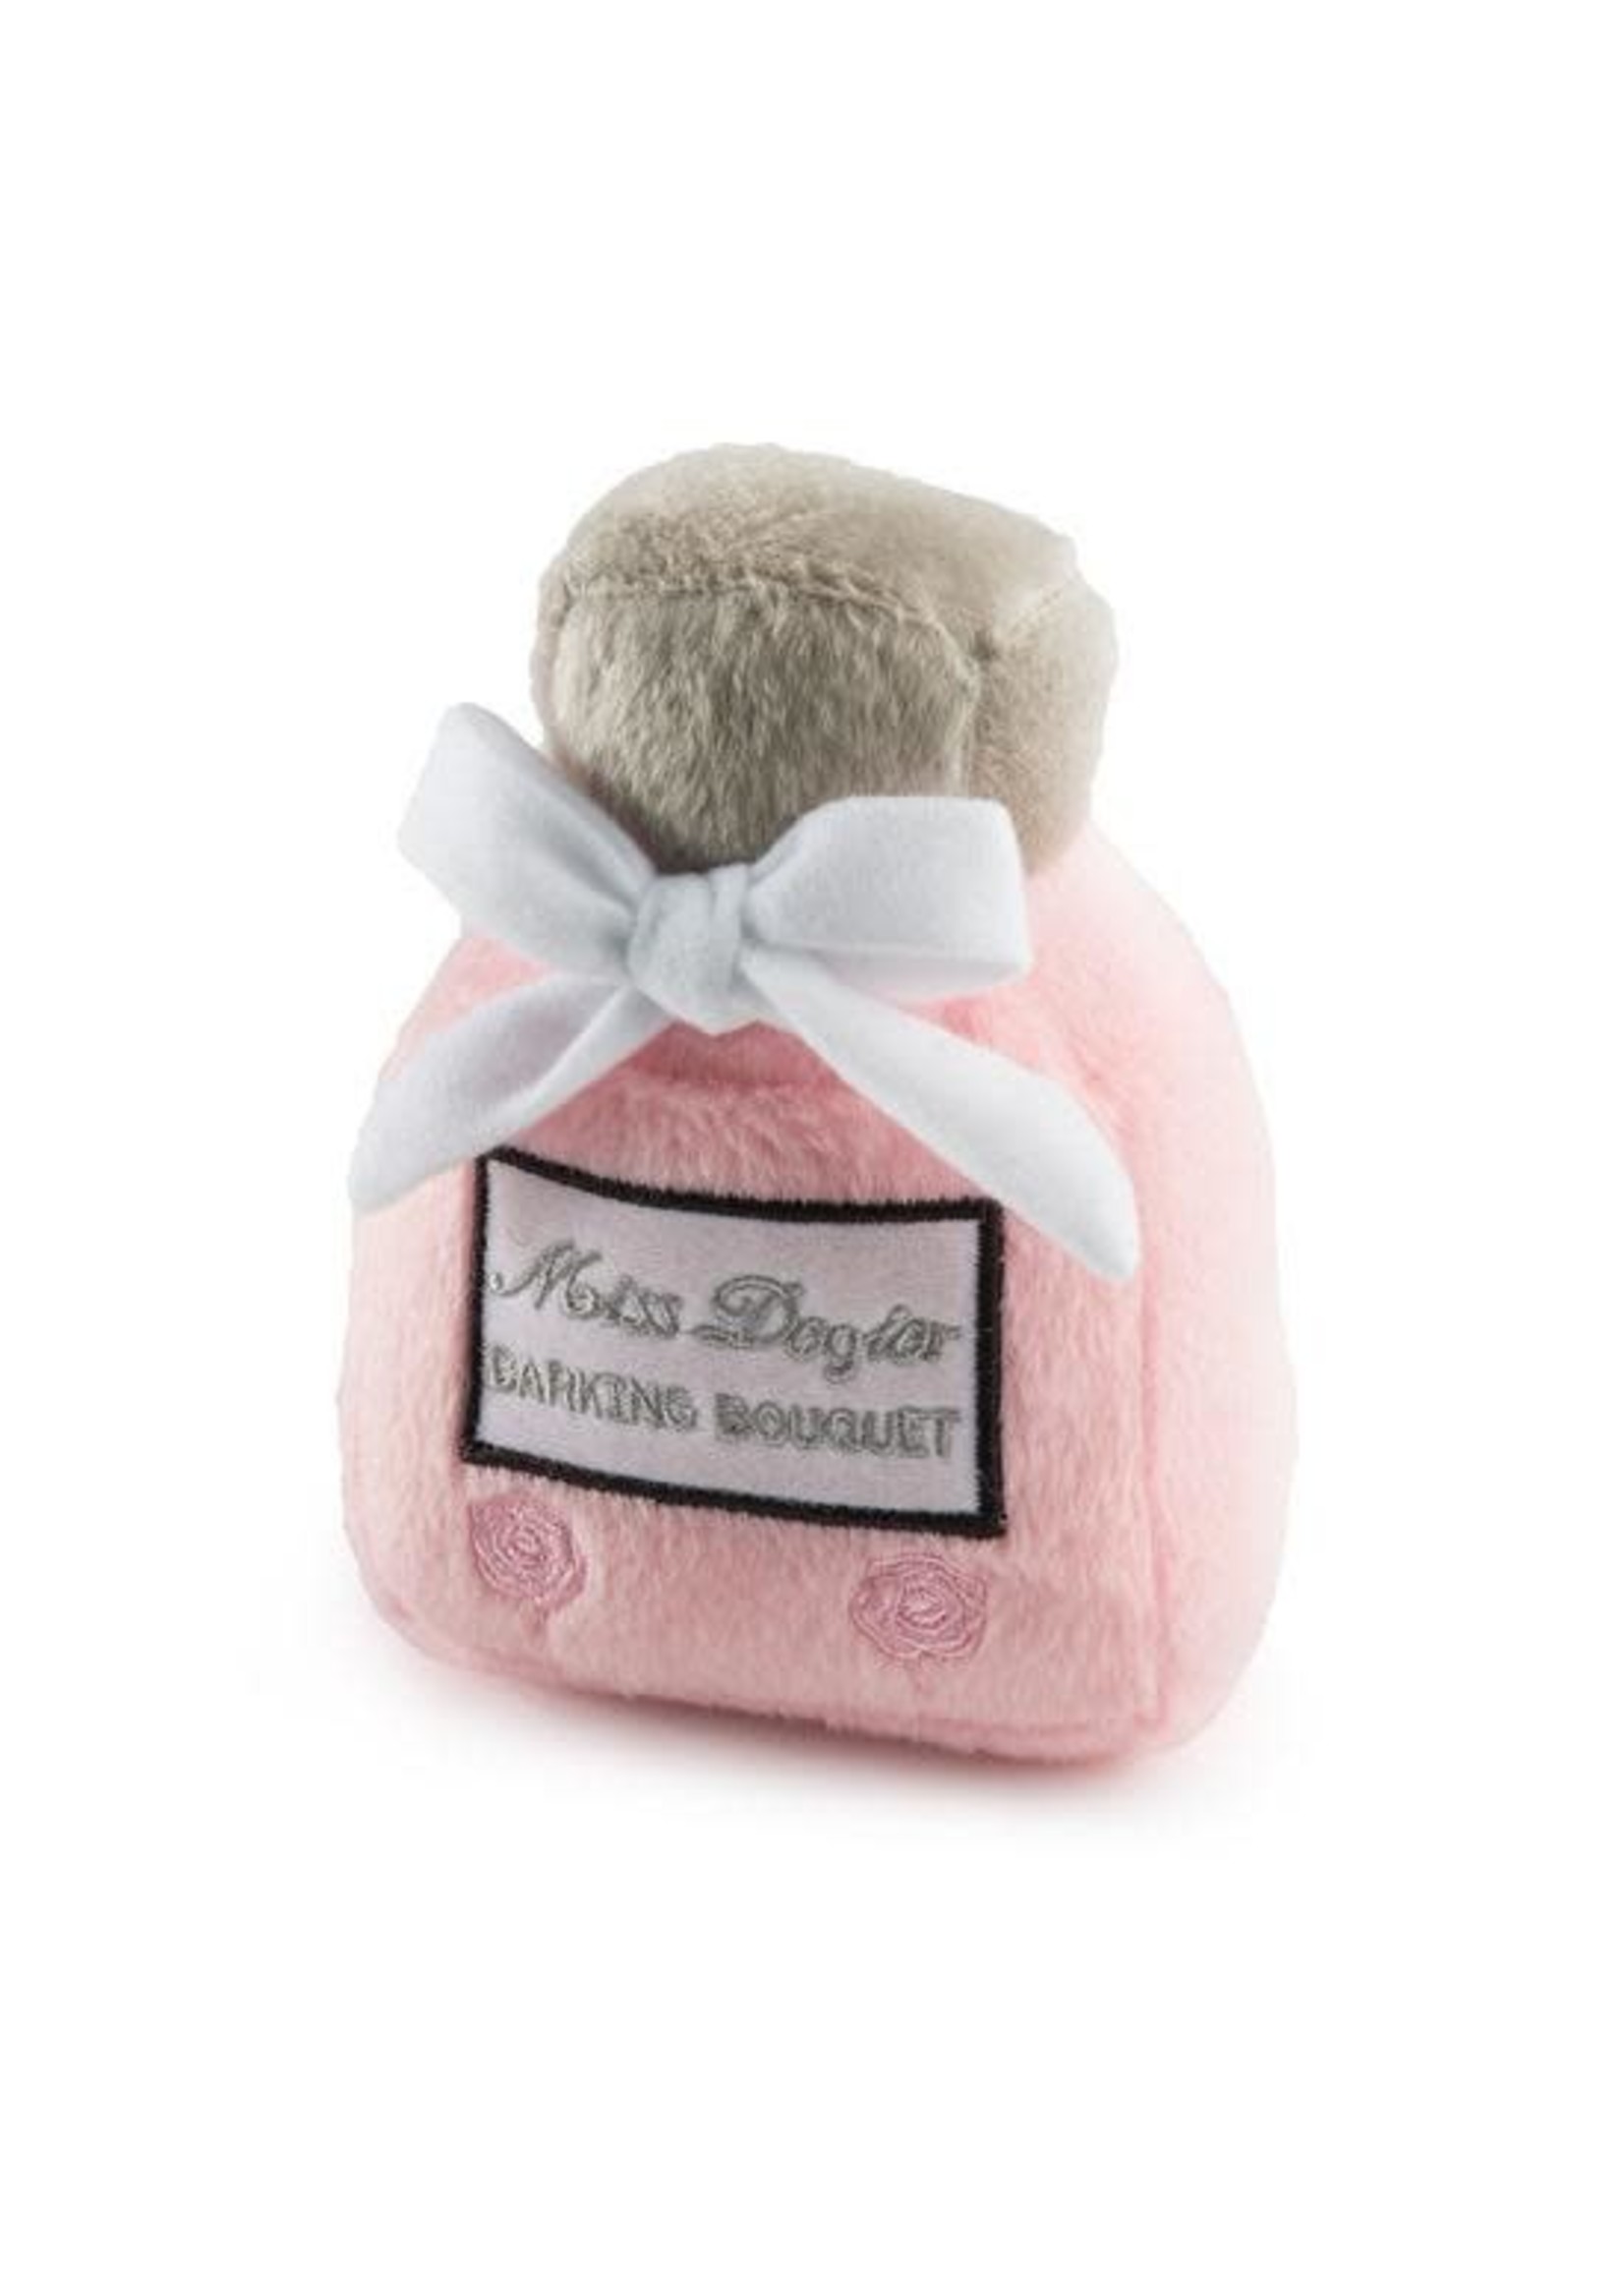 Haute Diggity Dog - Pink Ombre Handbag Squeaker Dog Toy